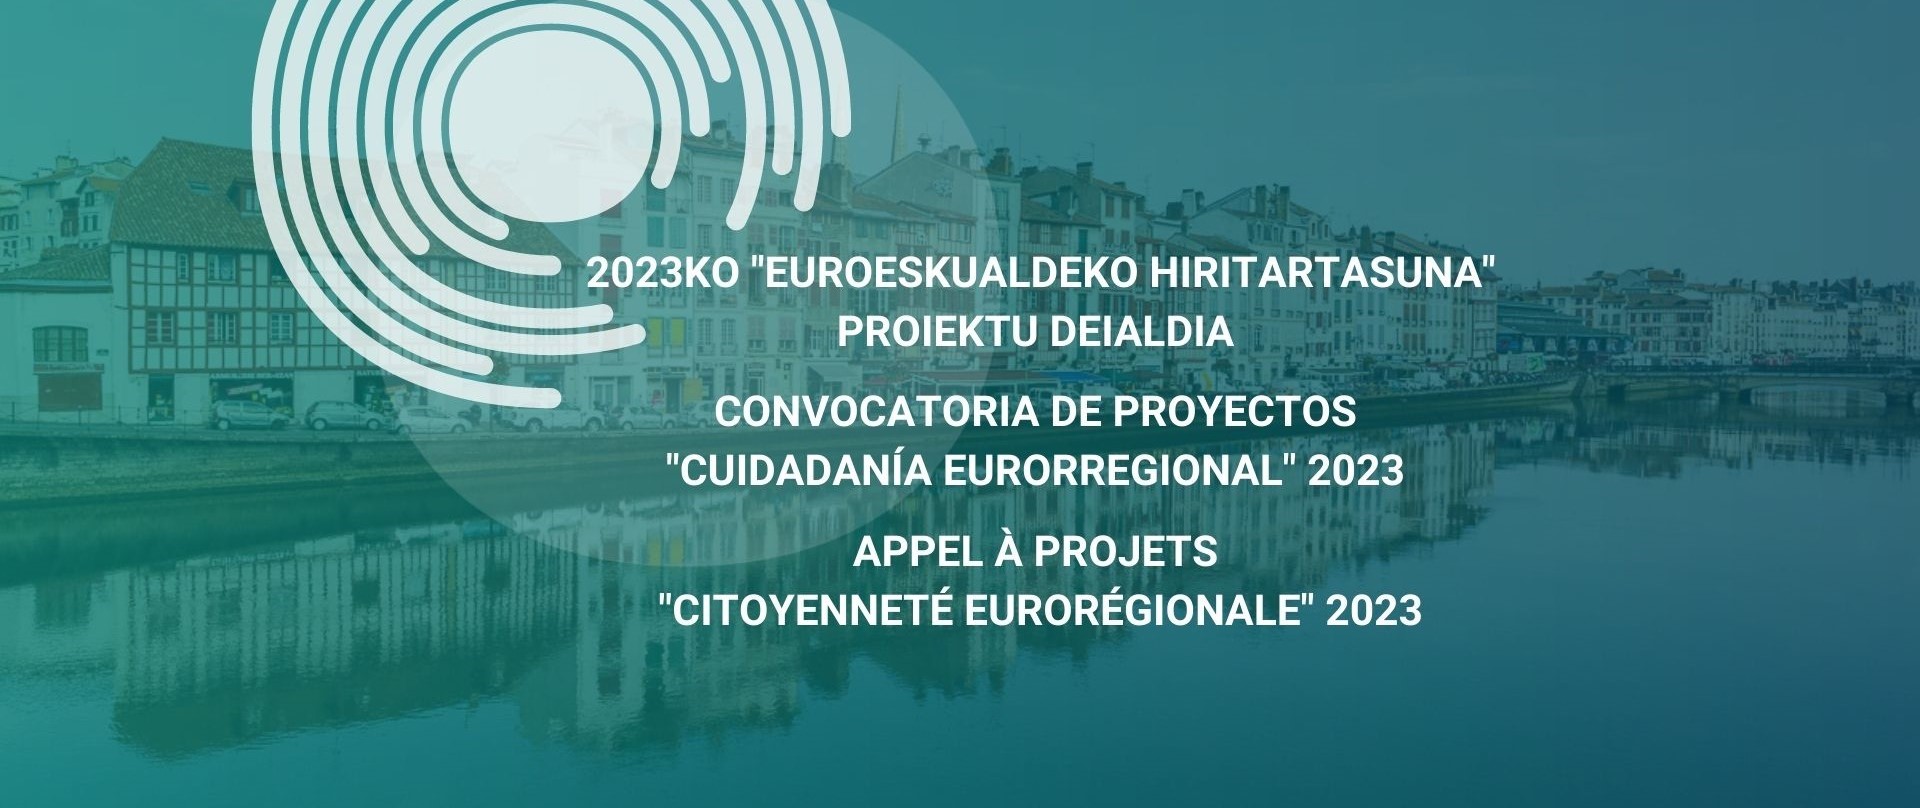 Convocatoria de proyectos «Ciudadanía Eurorregional» 2023/2023ko «Euroeskualdeko Hiritartasuna» proiektuen deialdia/Appel à projets «Citoyenneté Eurorégionale» 2023